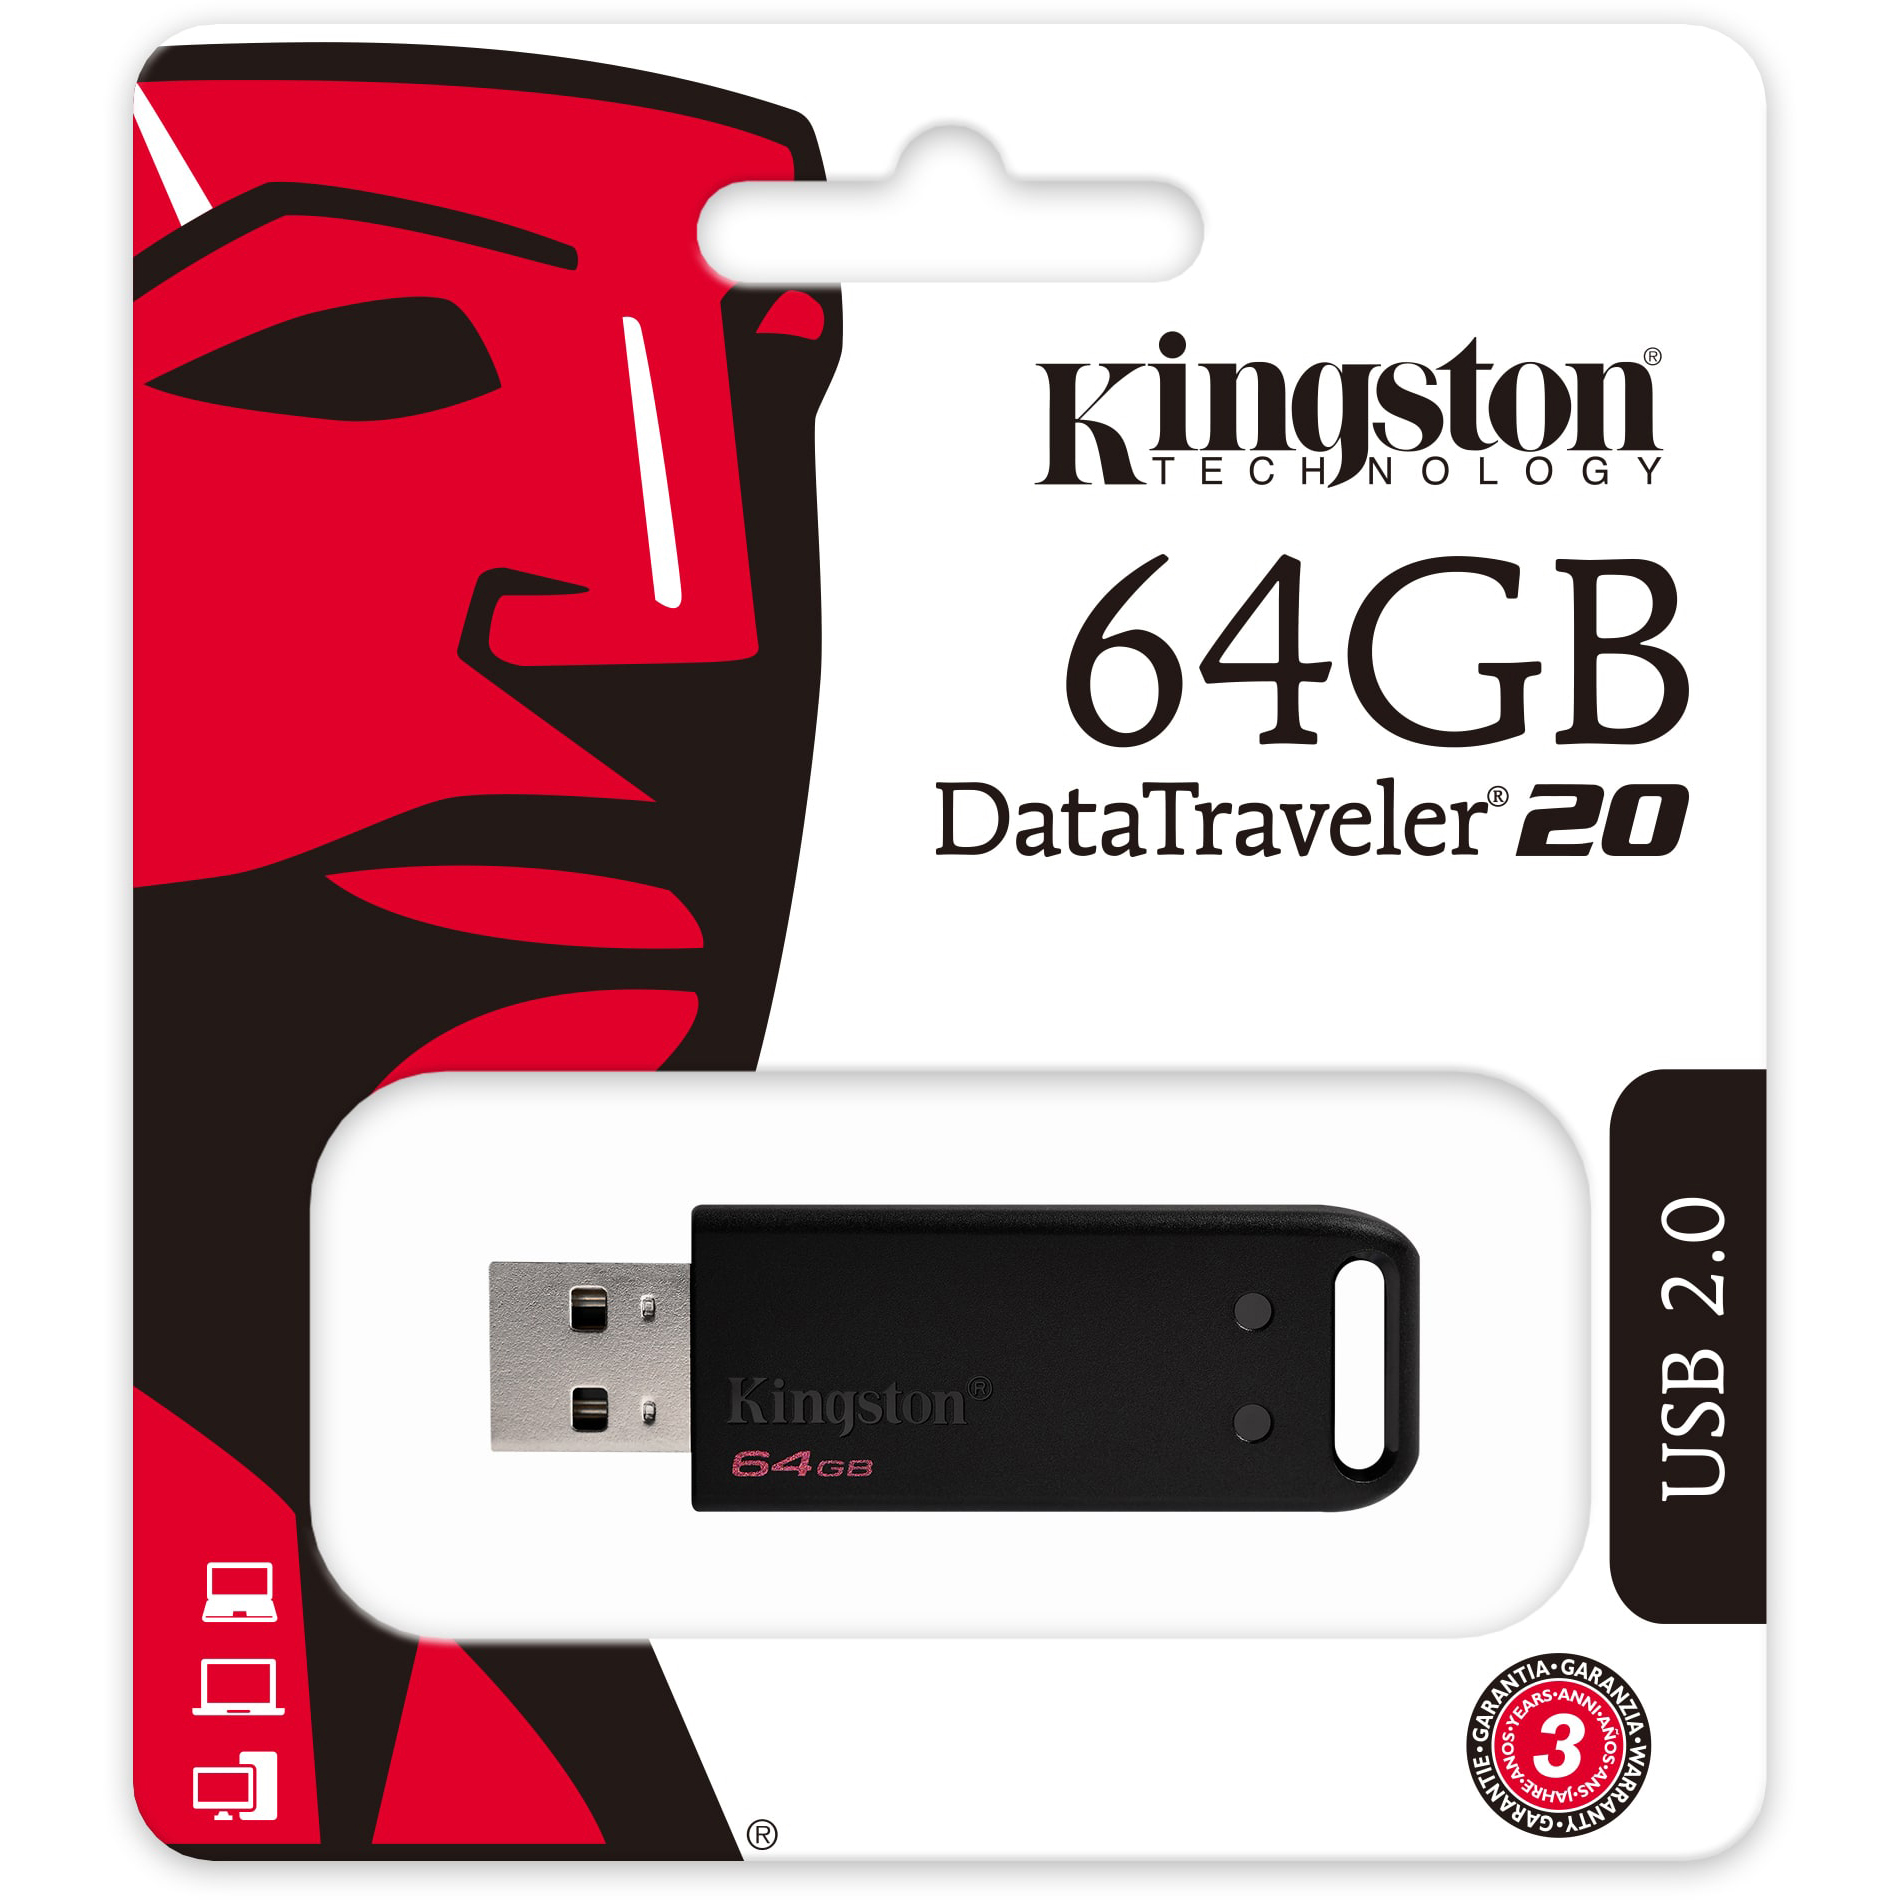 Original Kingston 64GB DataTraveler 20 USB 2.0 Flash Drive (DT20/64GB)